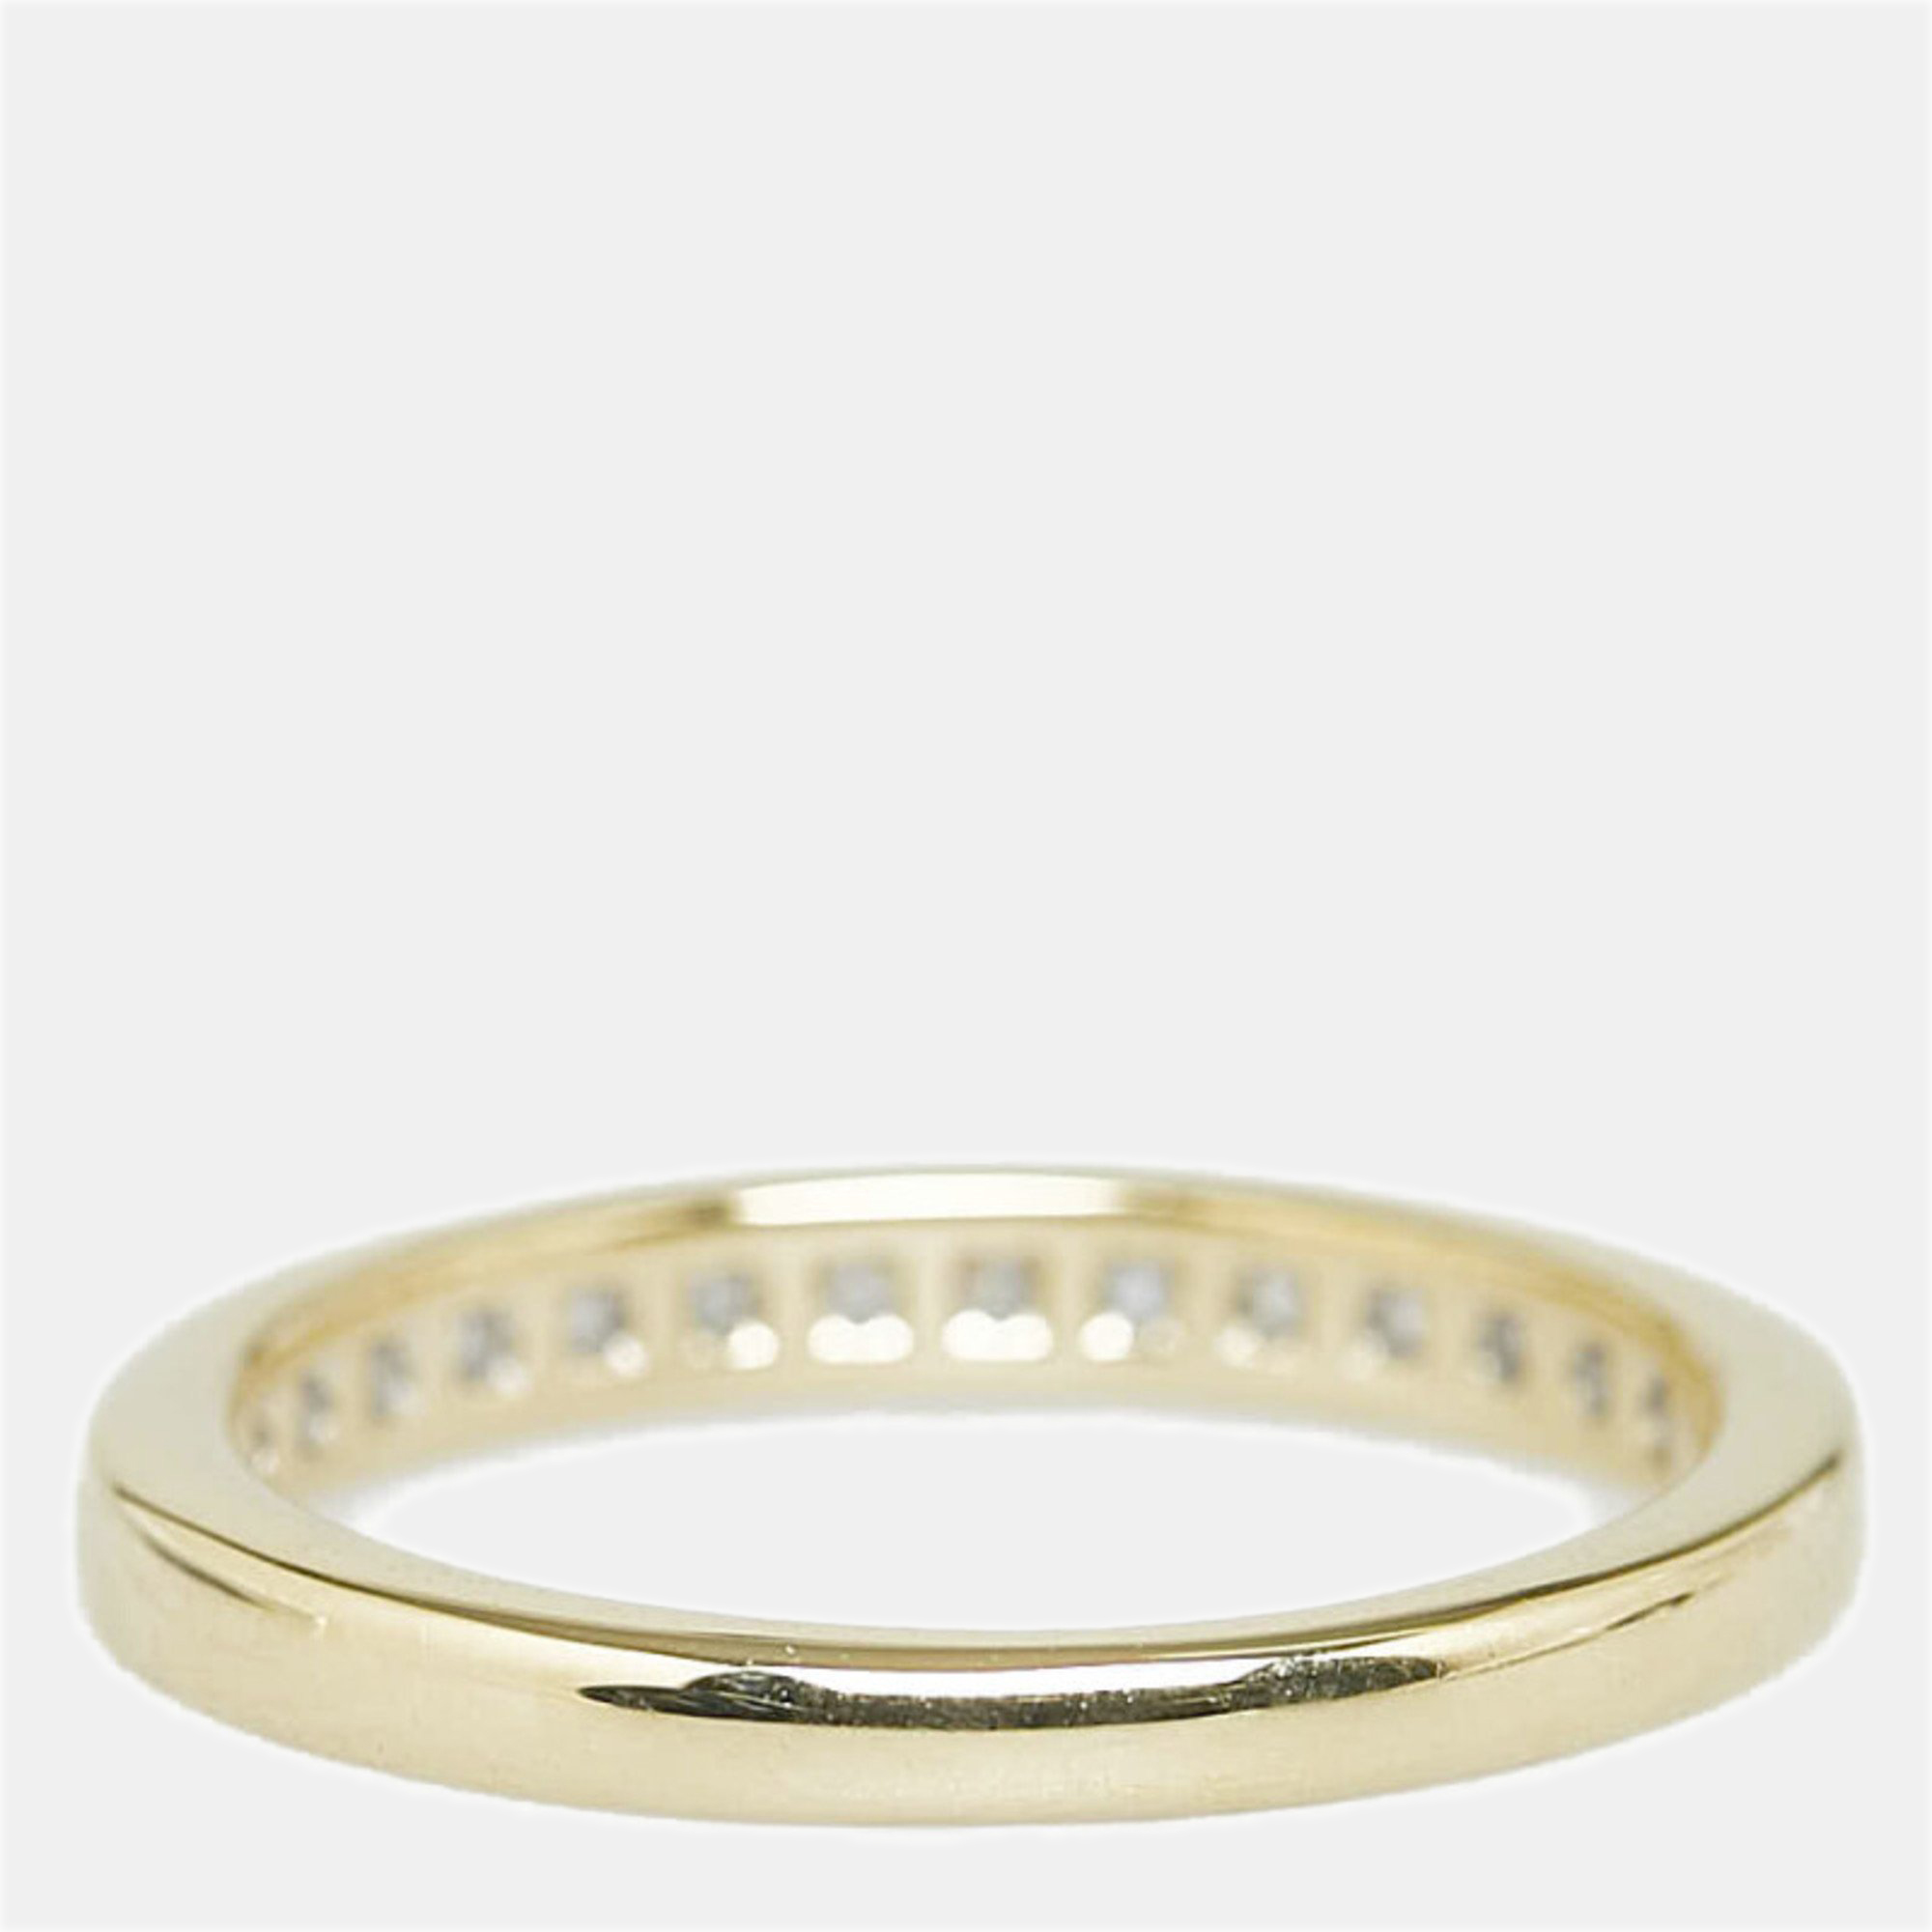 Tiffany & Co. Tiffany Setting 18K Yellow Gold Diamond Ring EU 49